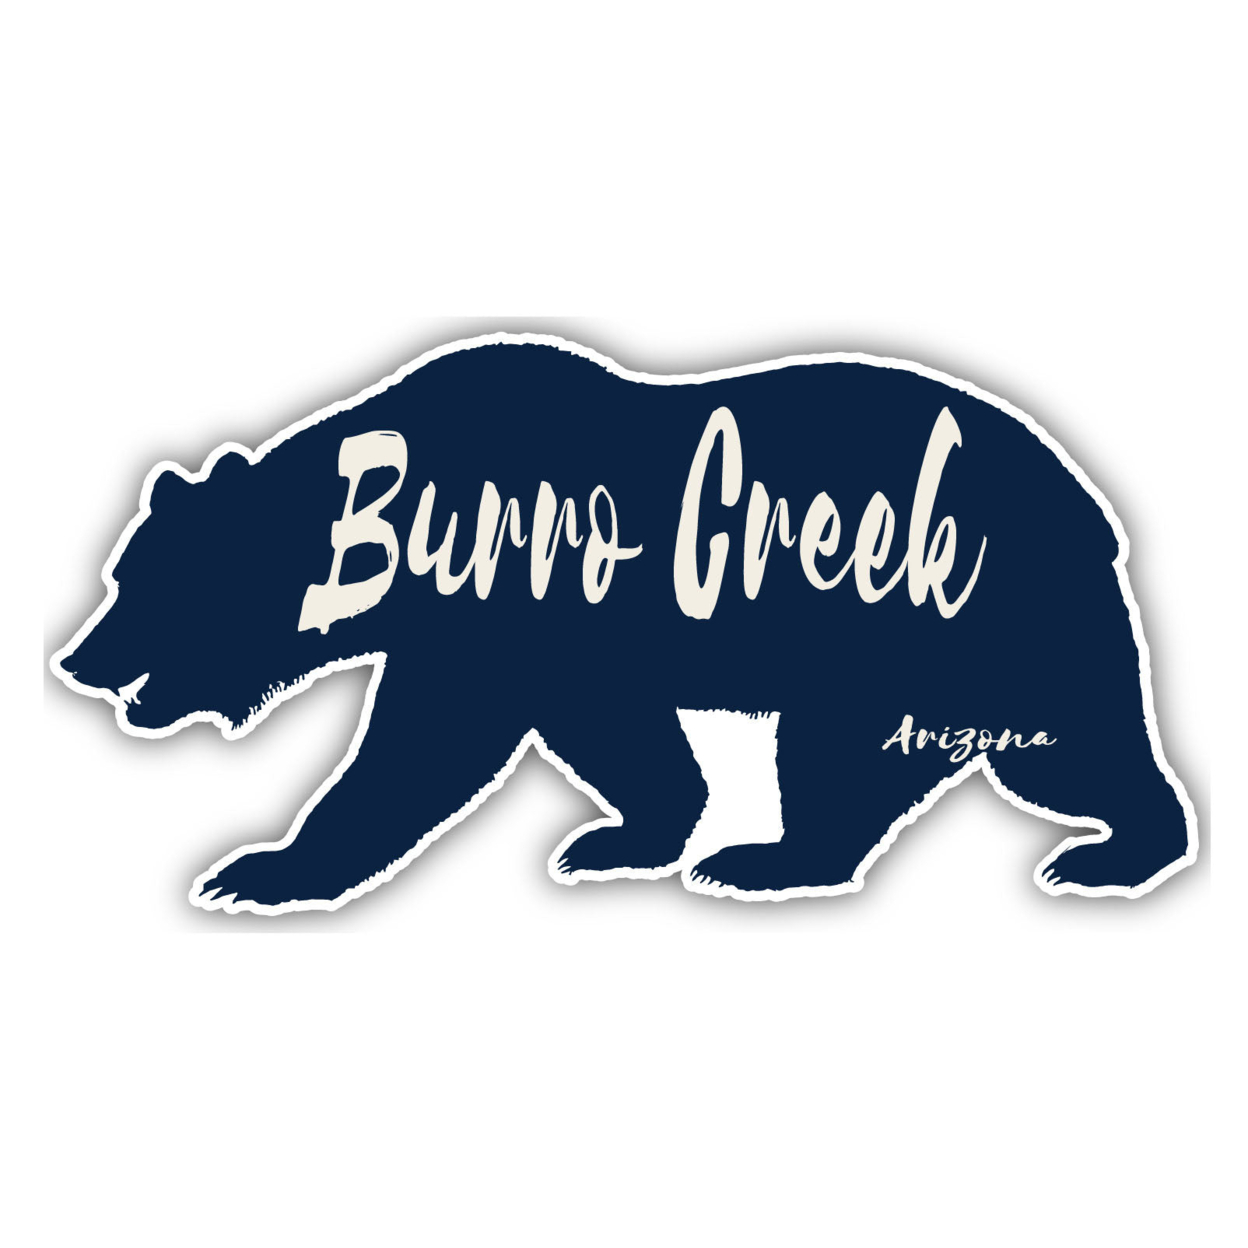 Burro Creek Arizona Souvenir Decorative Stickers (Choose Theme And Size) - Single Unit, 2-Inch, Bear